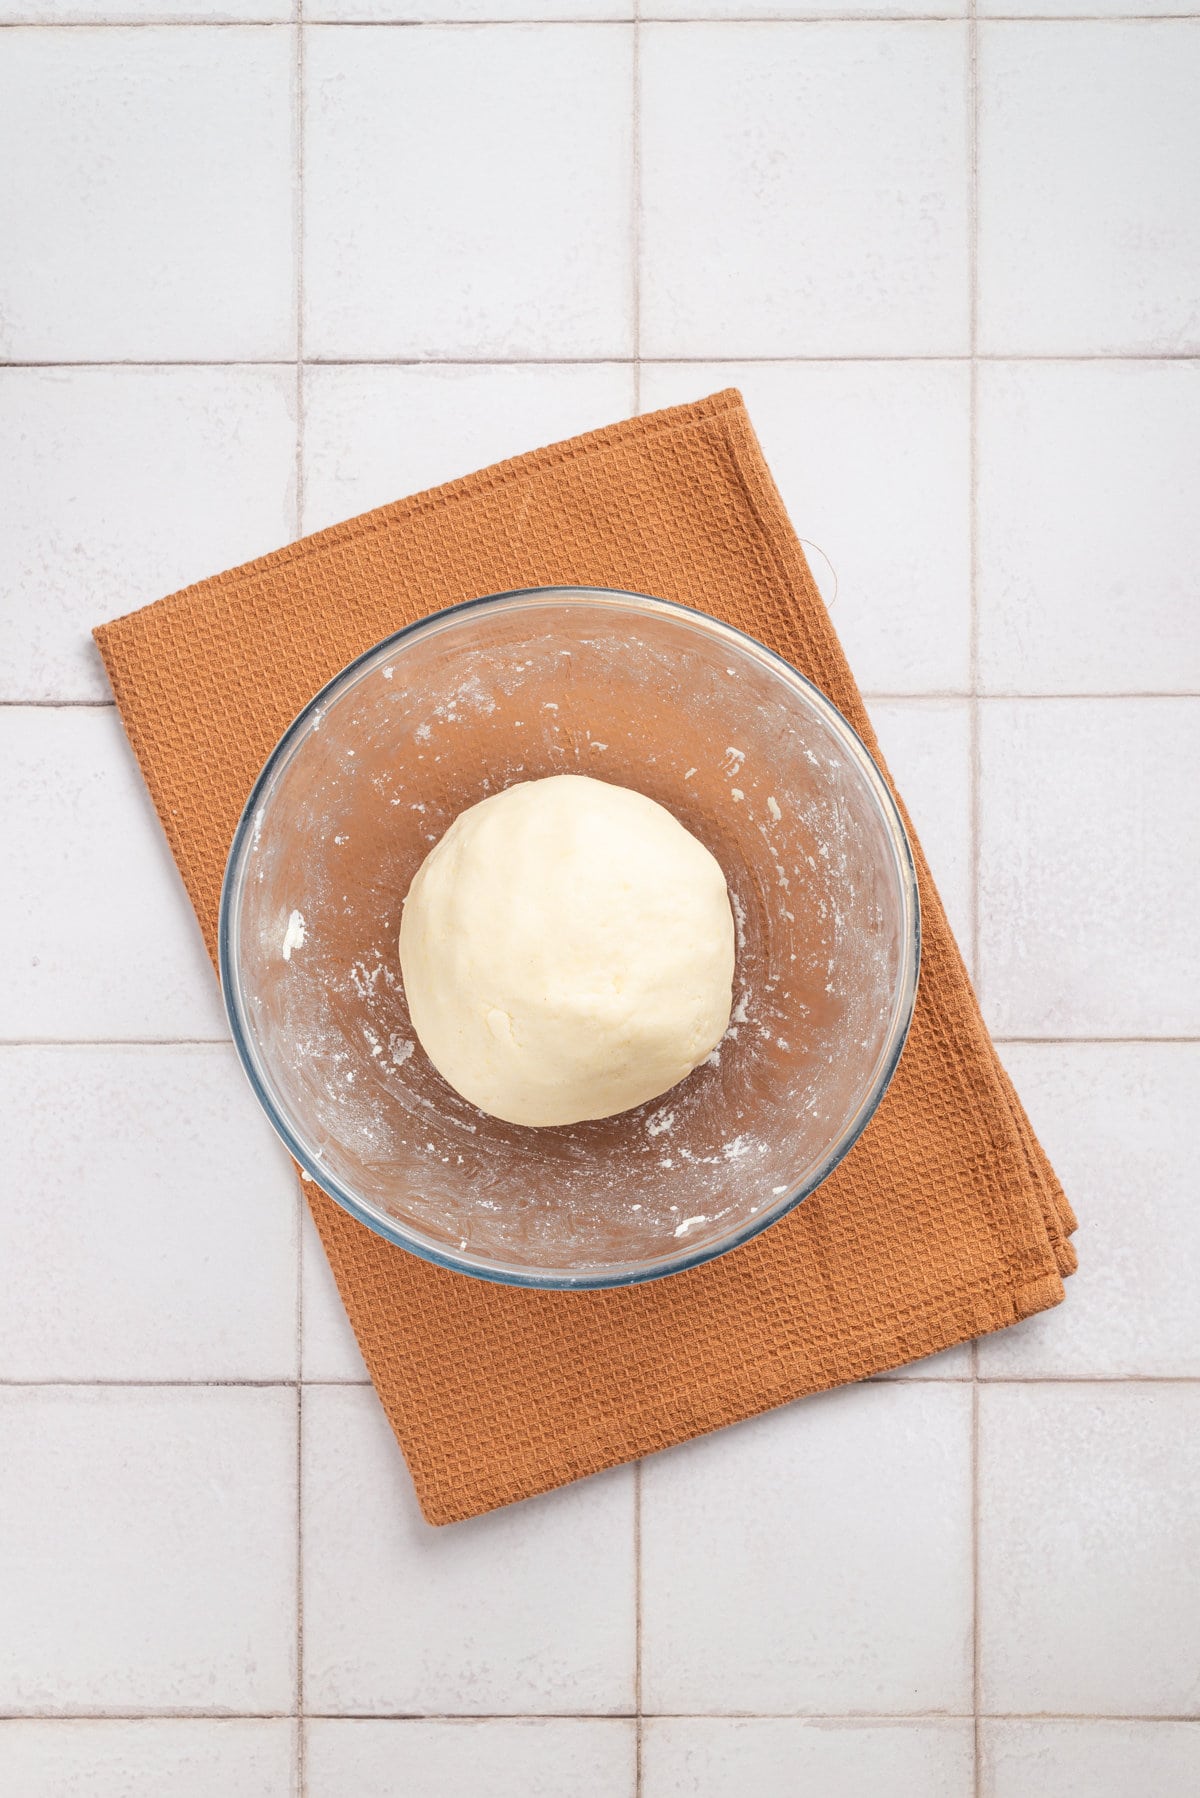 An overhead image of dough kneaded into a big ball.